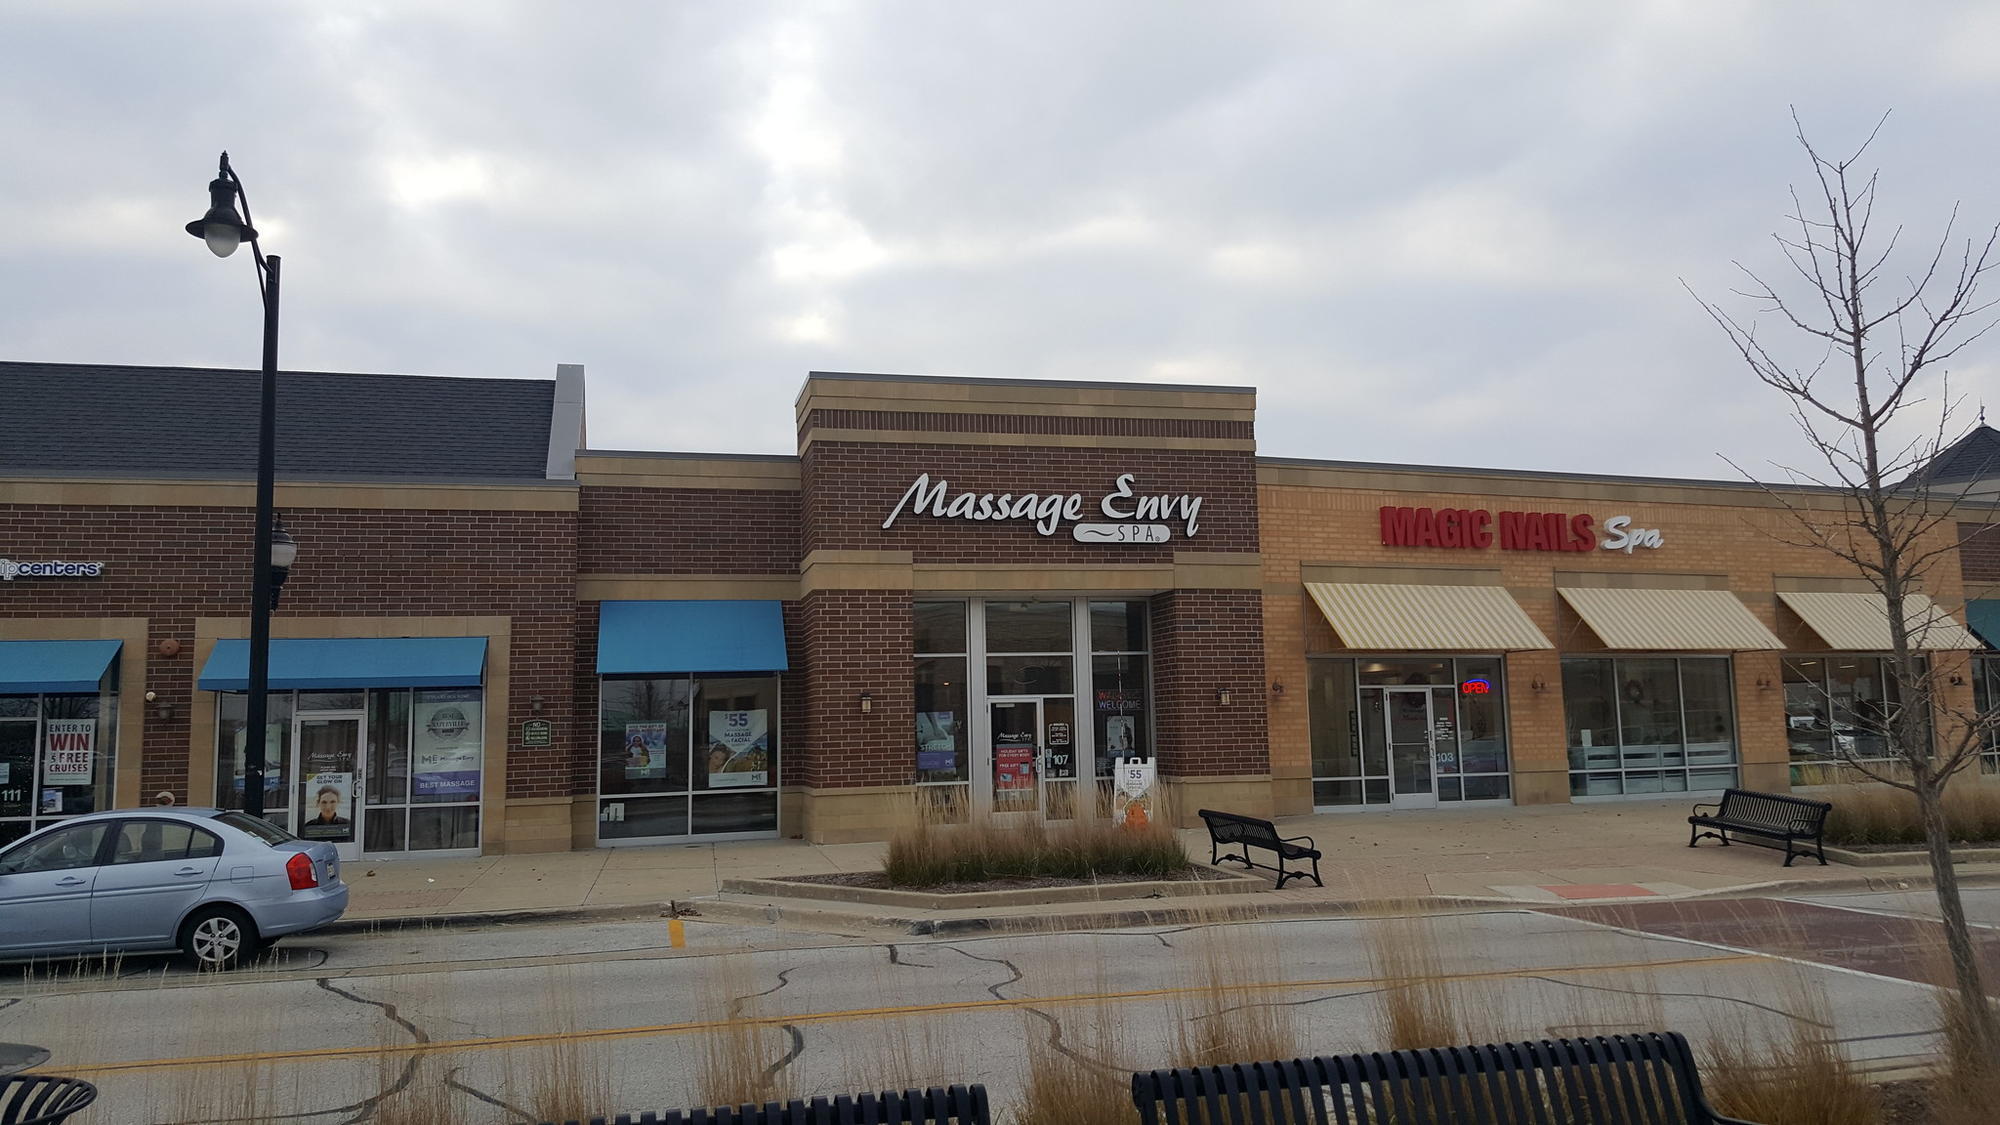 ct-met-massage-envy-suburbs-chicago-20171128